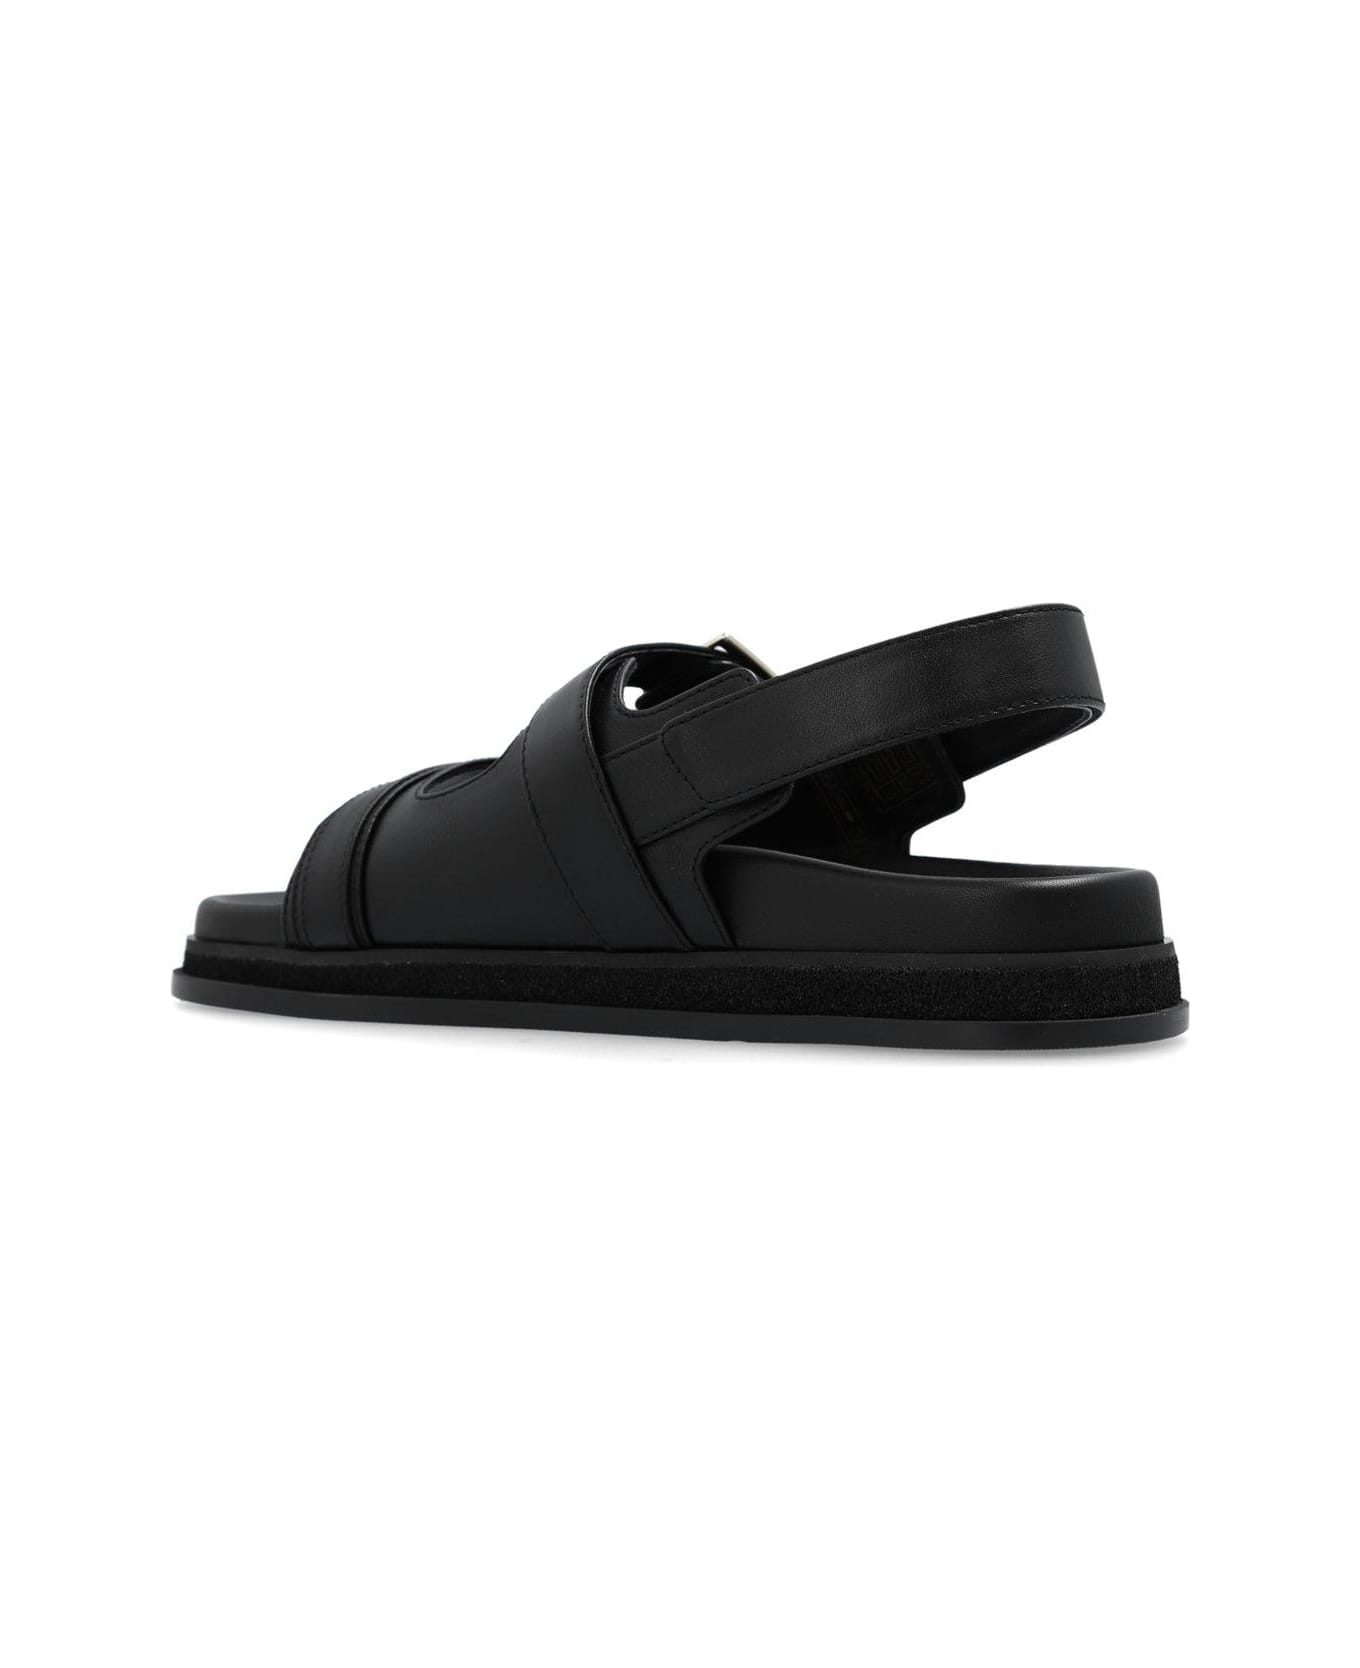 Jimmy Choo Flat Sandals - Black